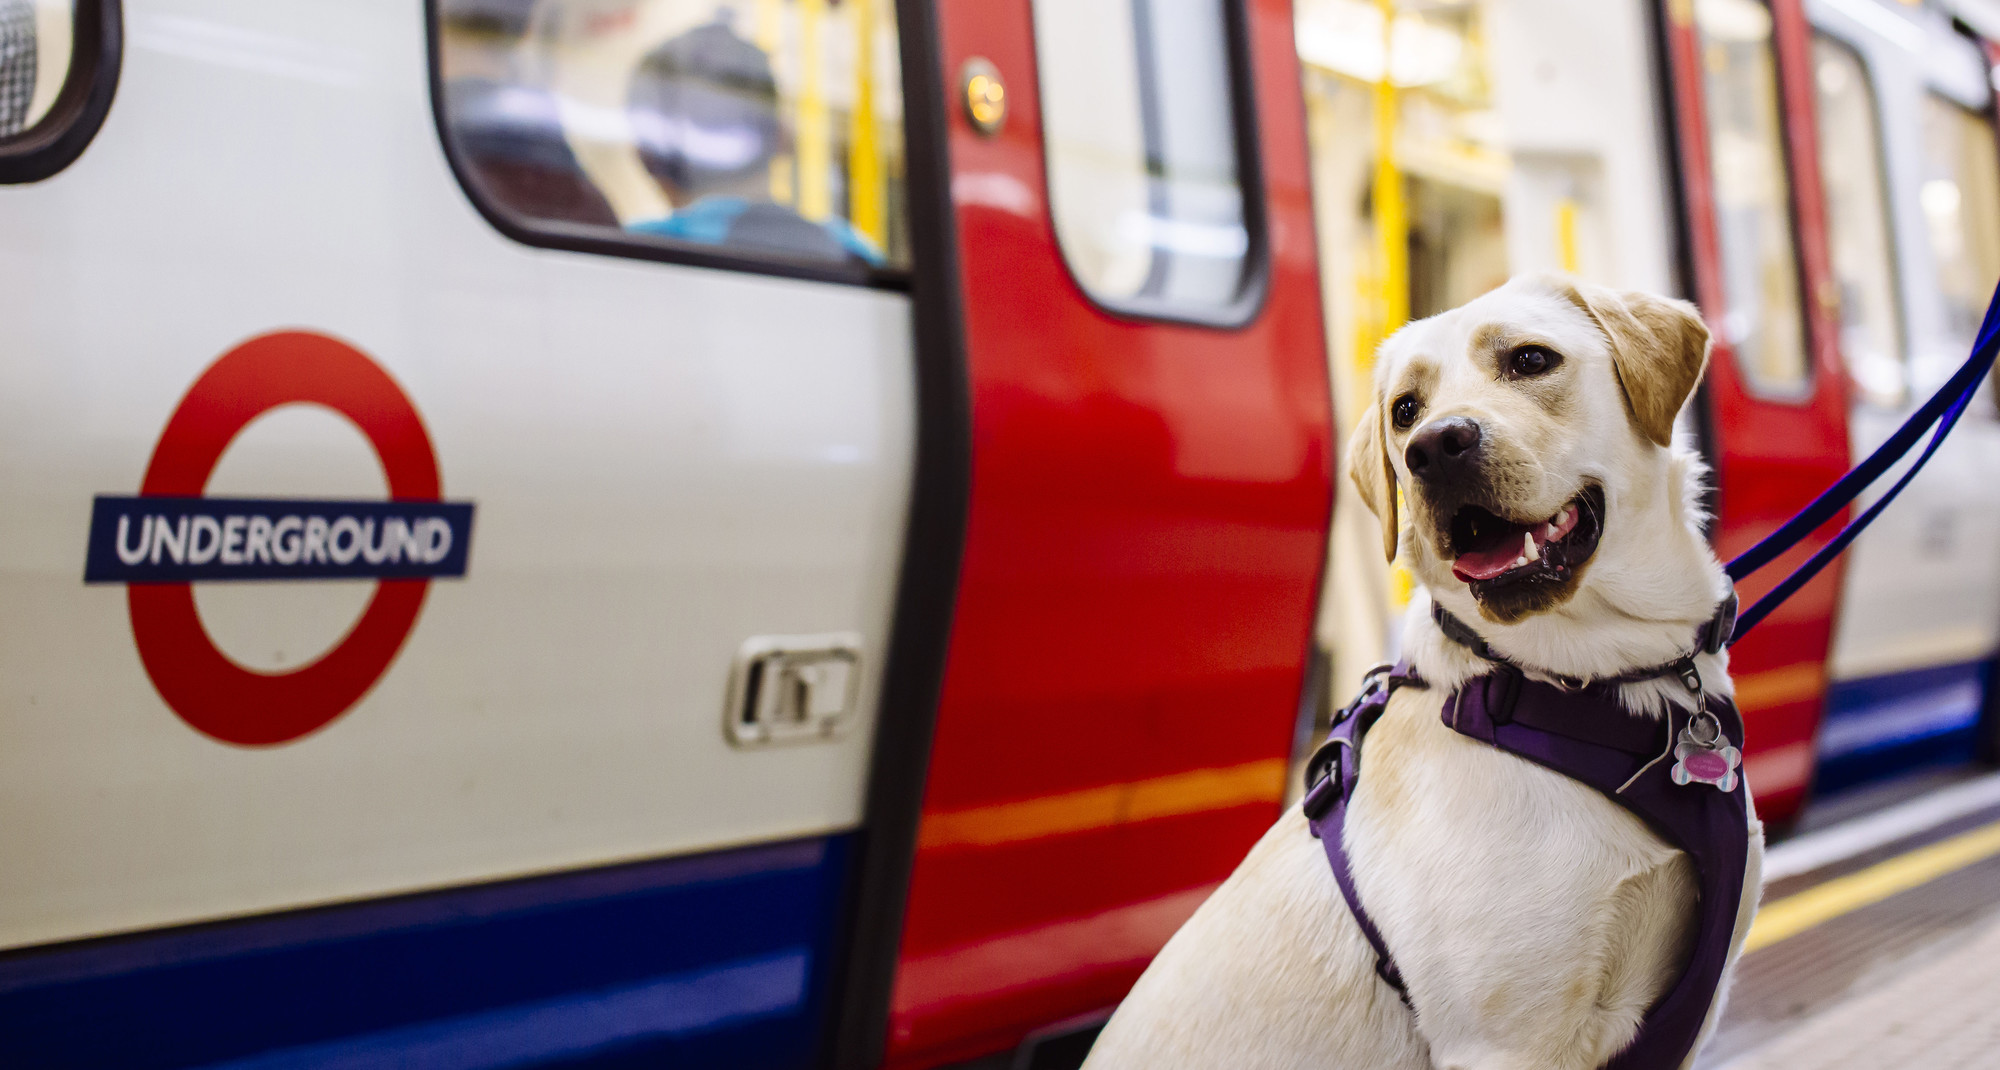 Golden Labrador stood on the platform waiting for Underground train